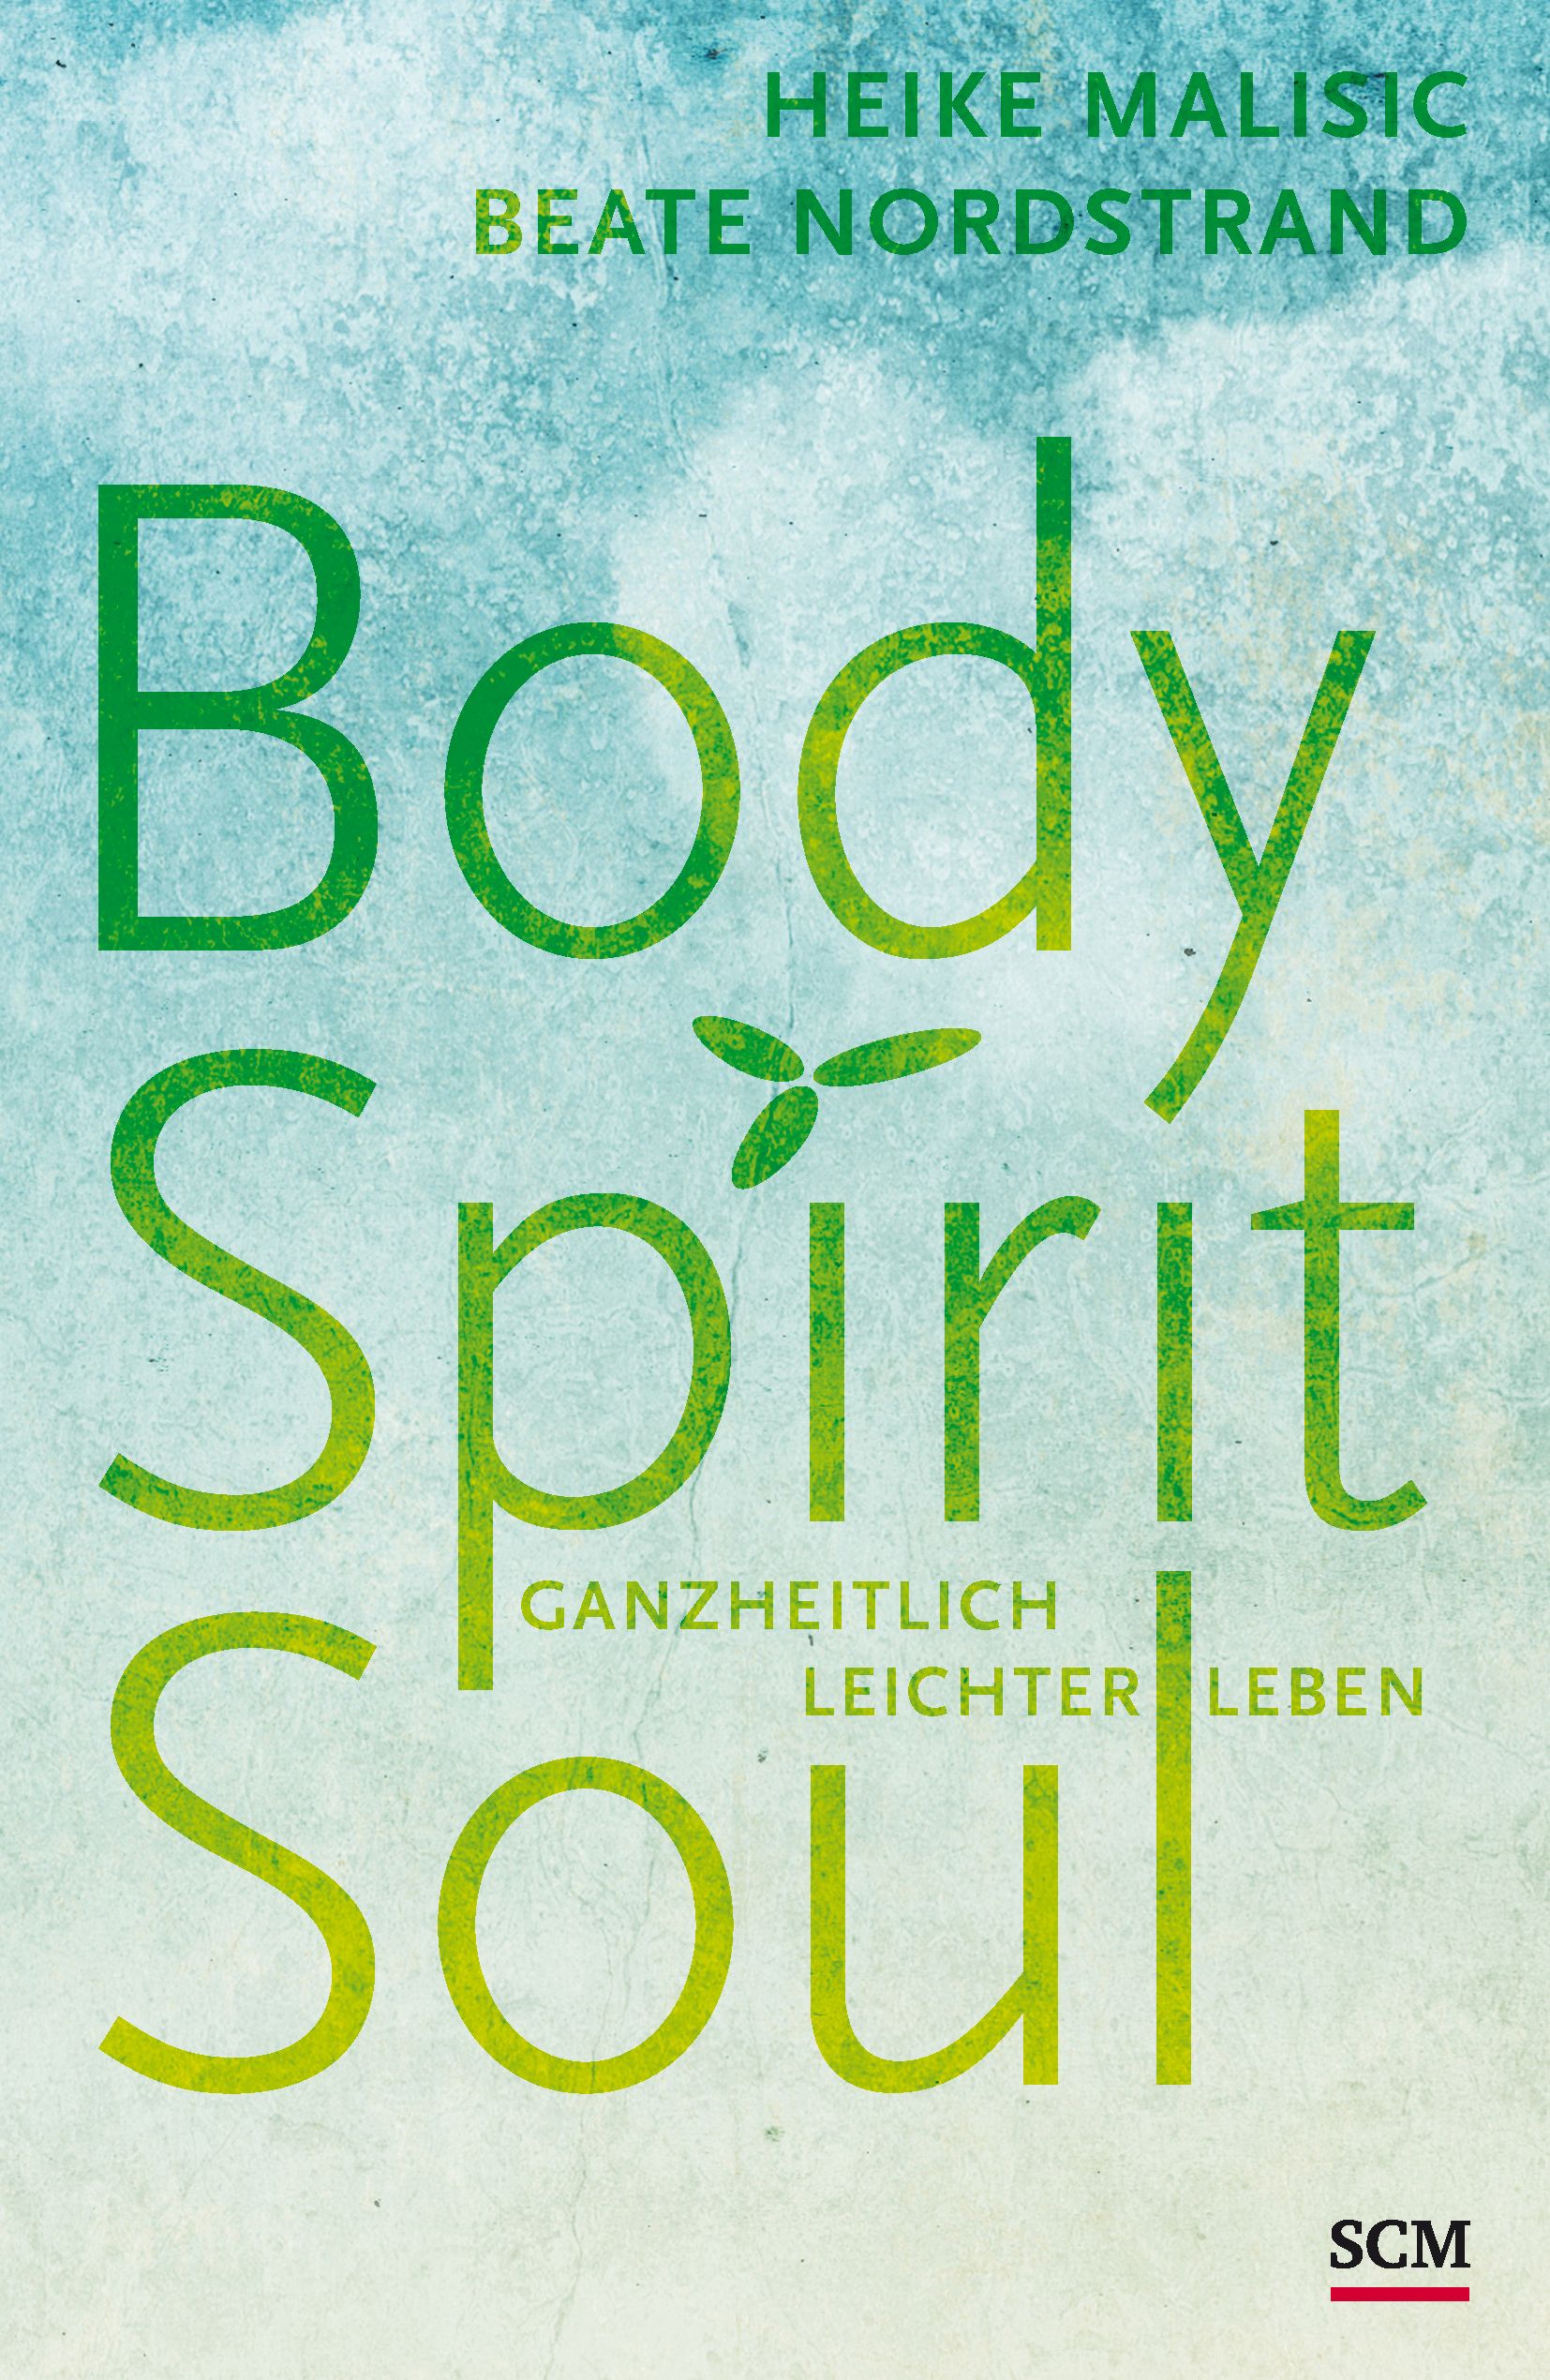 Body, Spirit, Soul